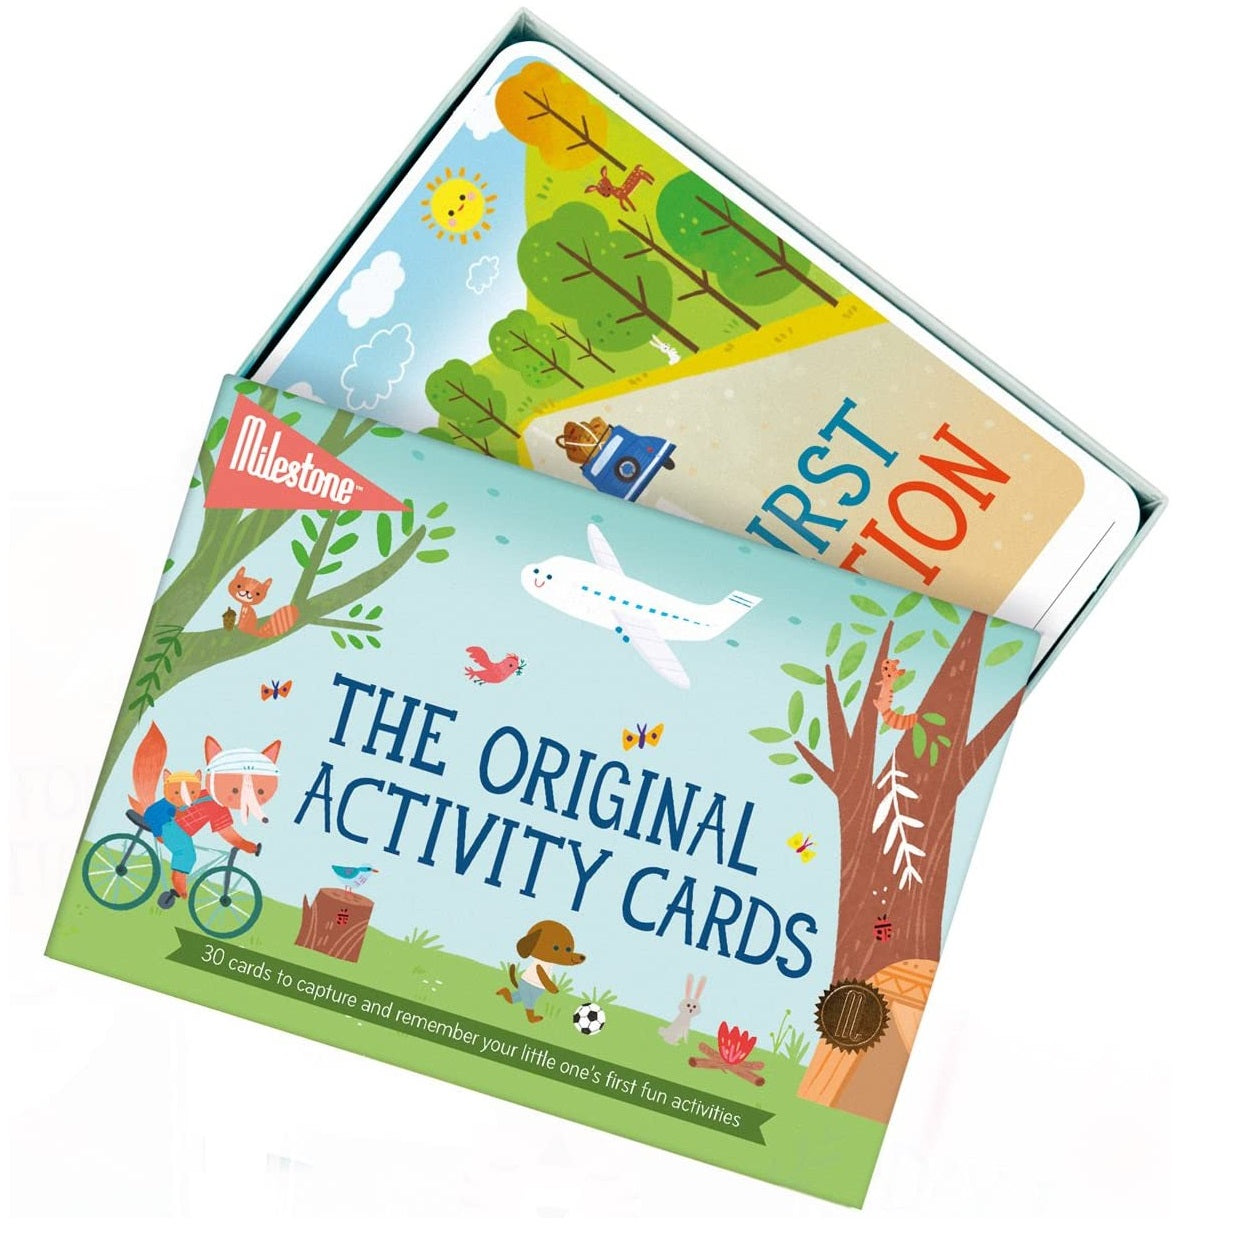 The Original Activity Cards - Milestone